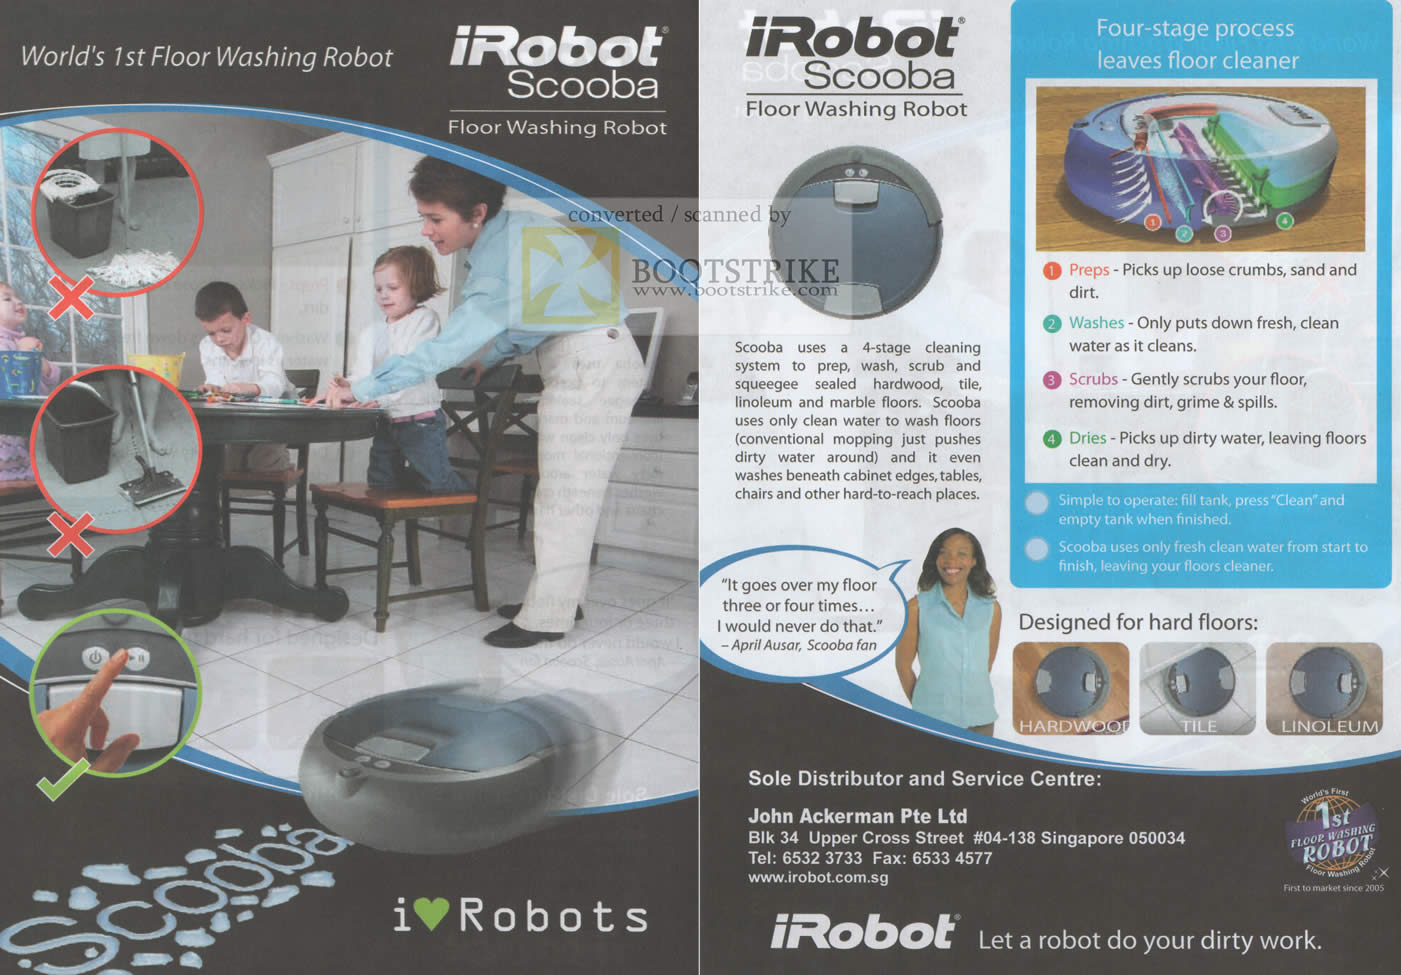 Sitex 2009 price list image brochure of IRobot Scooba Floor Washing Robot